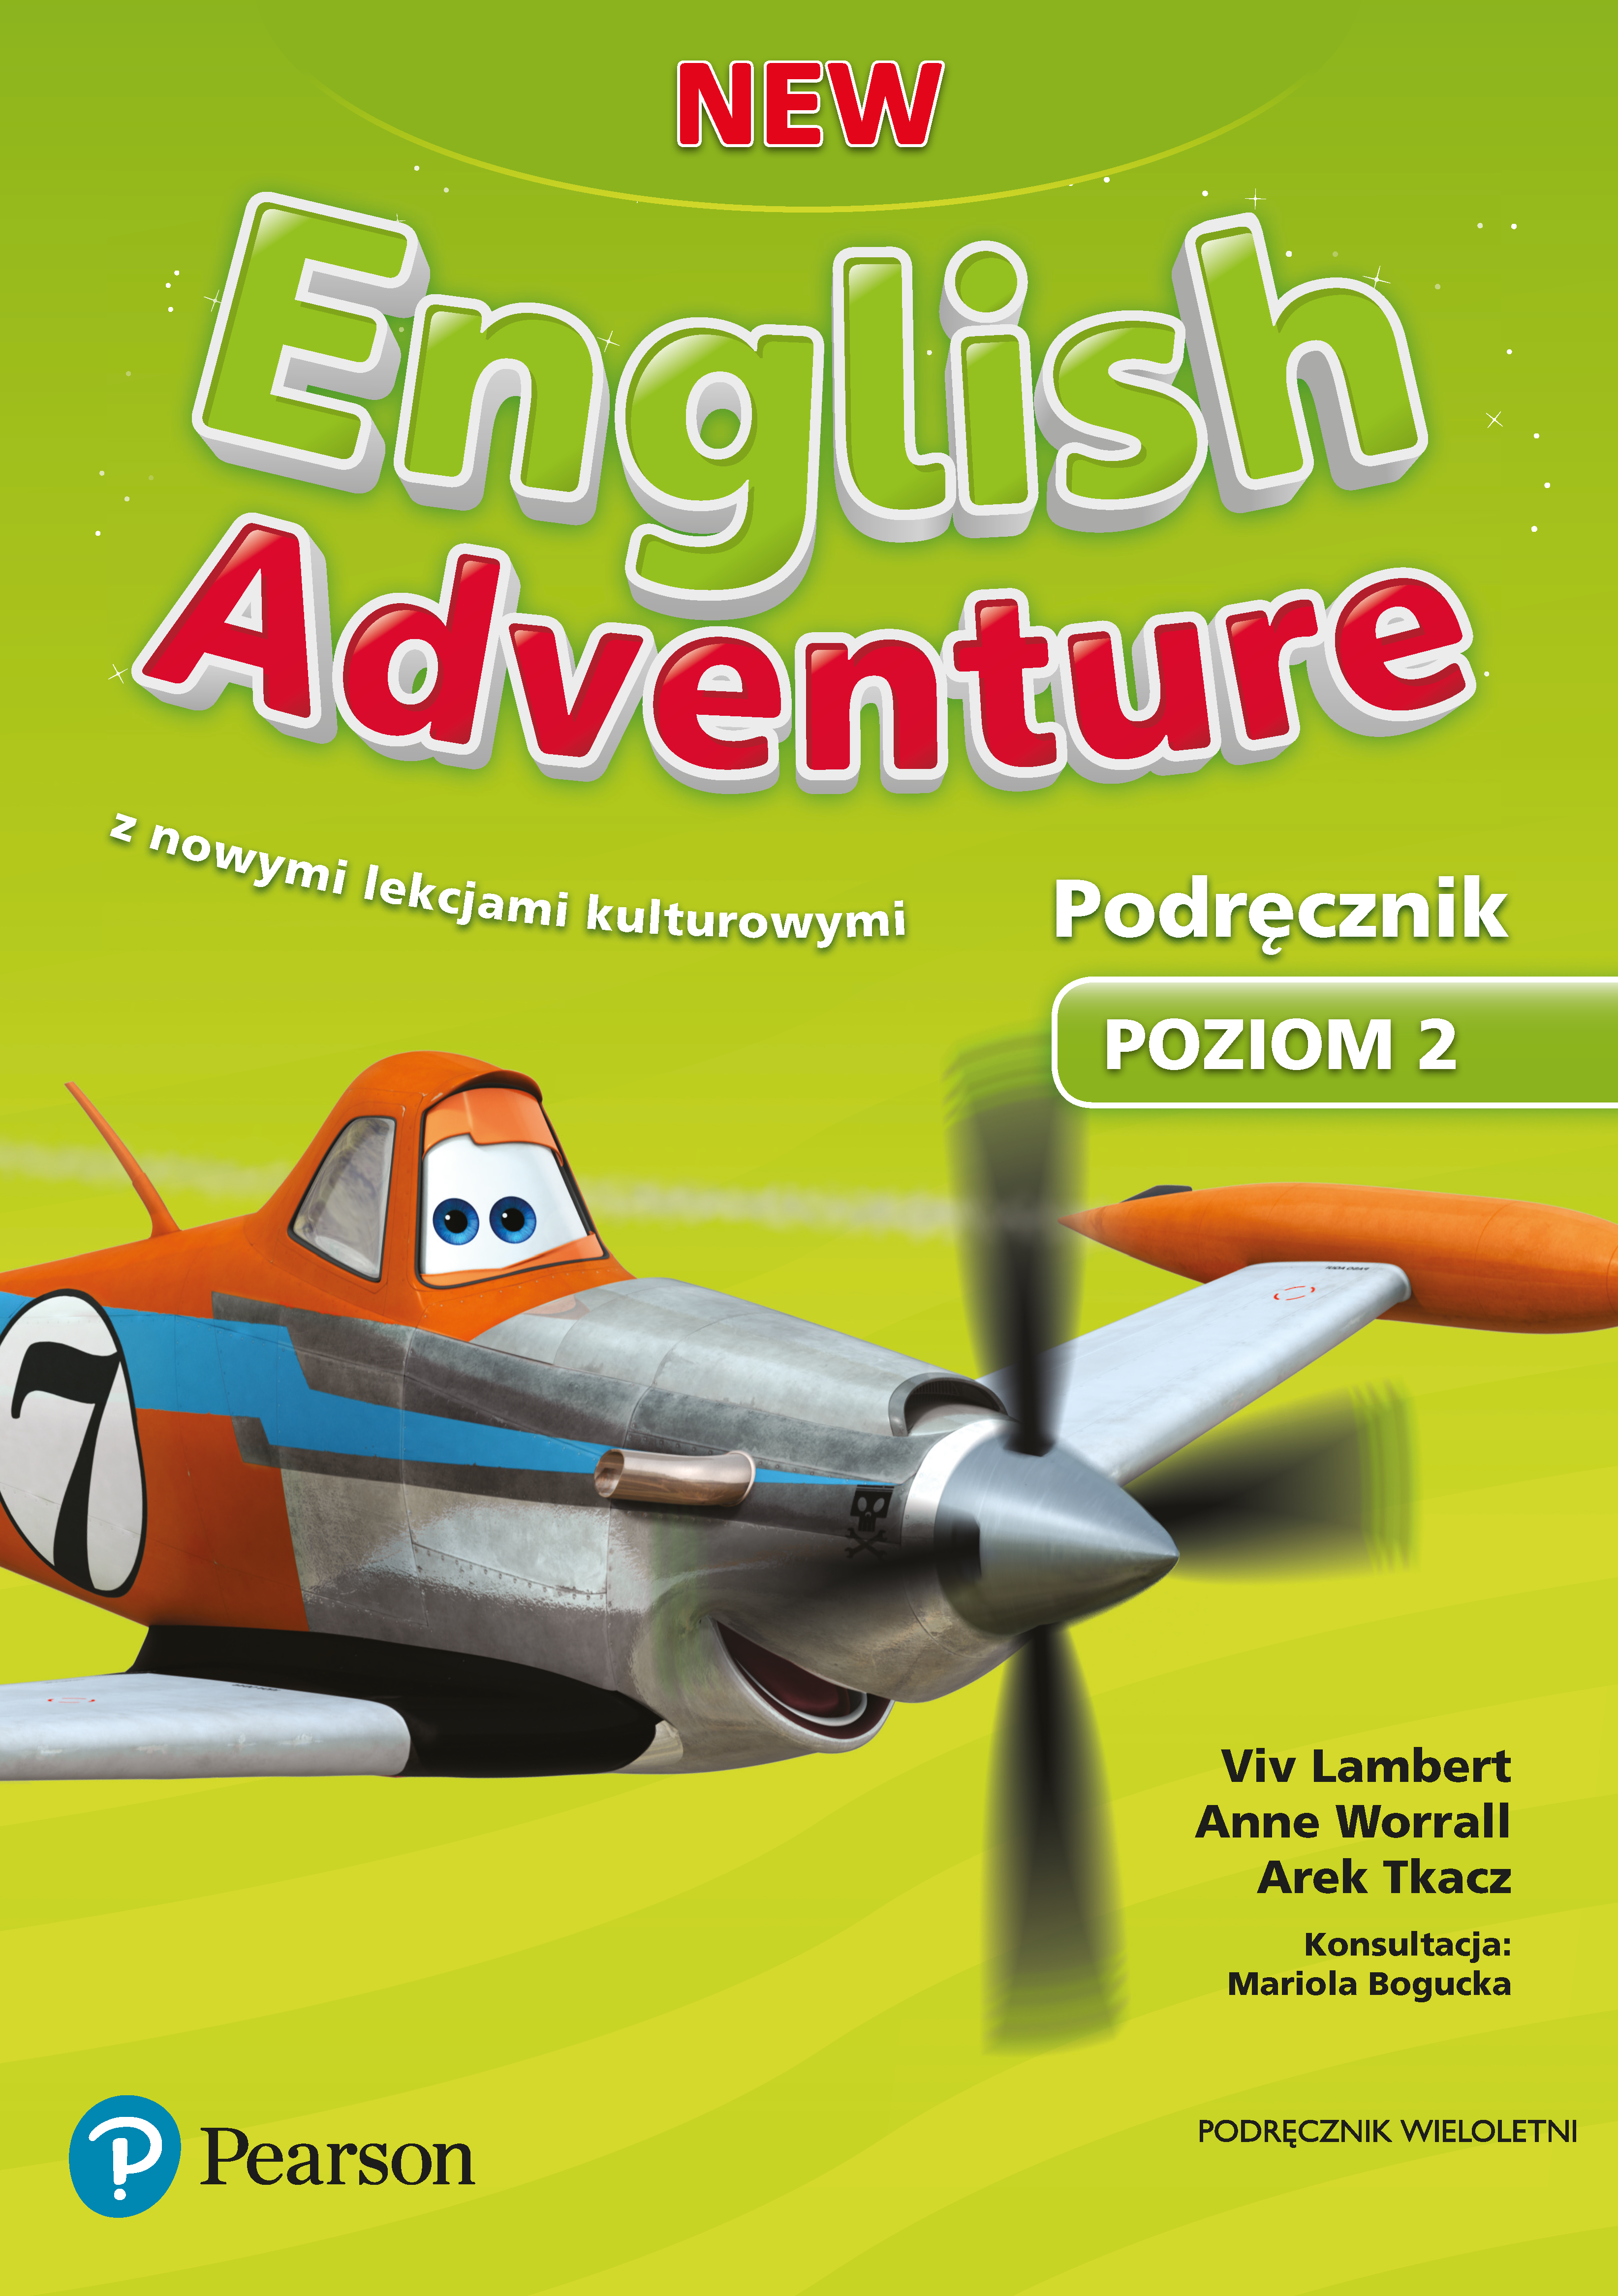 New English Adventure 2 My Body And Face New English Adventure 2 - audio – kolekcja na edesk.pearson.pl